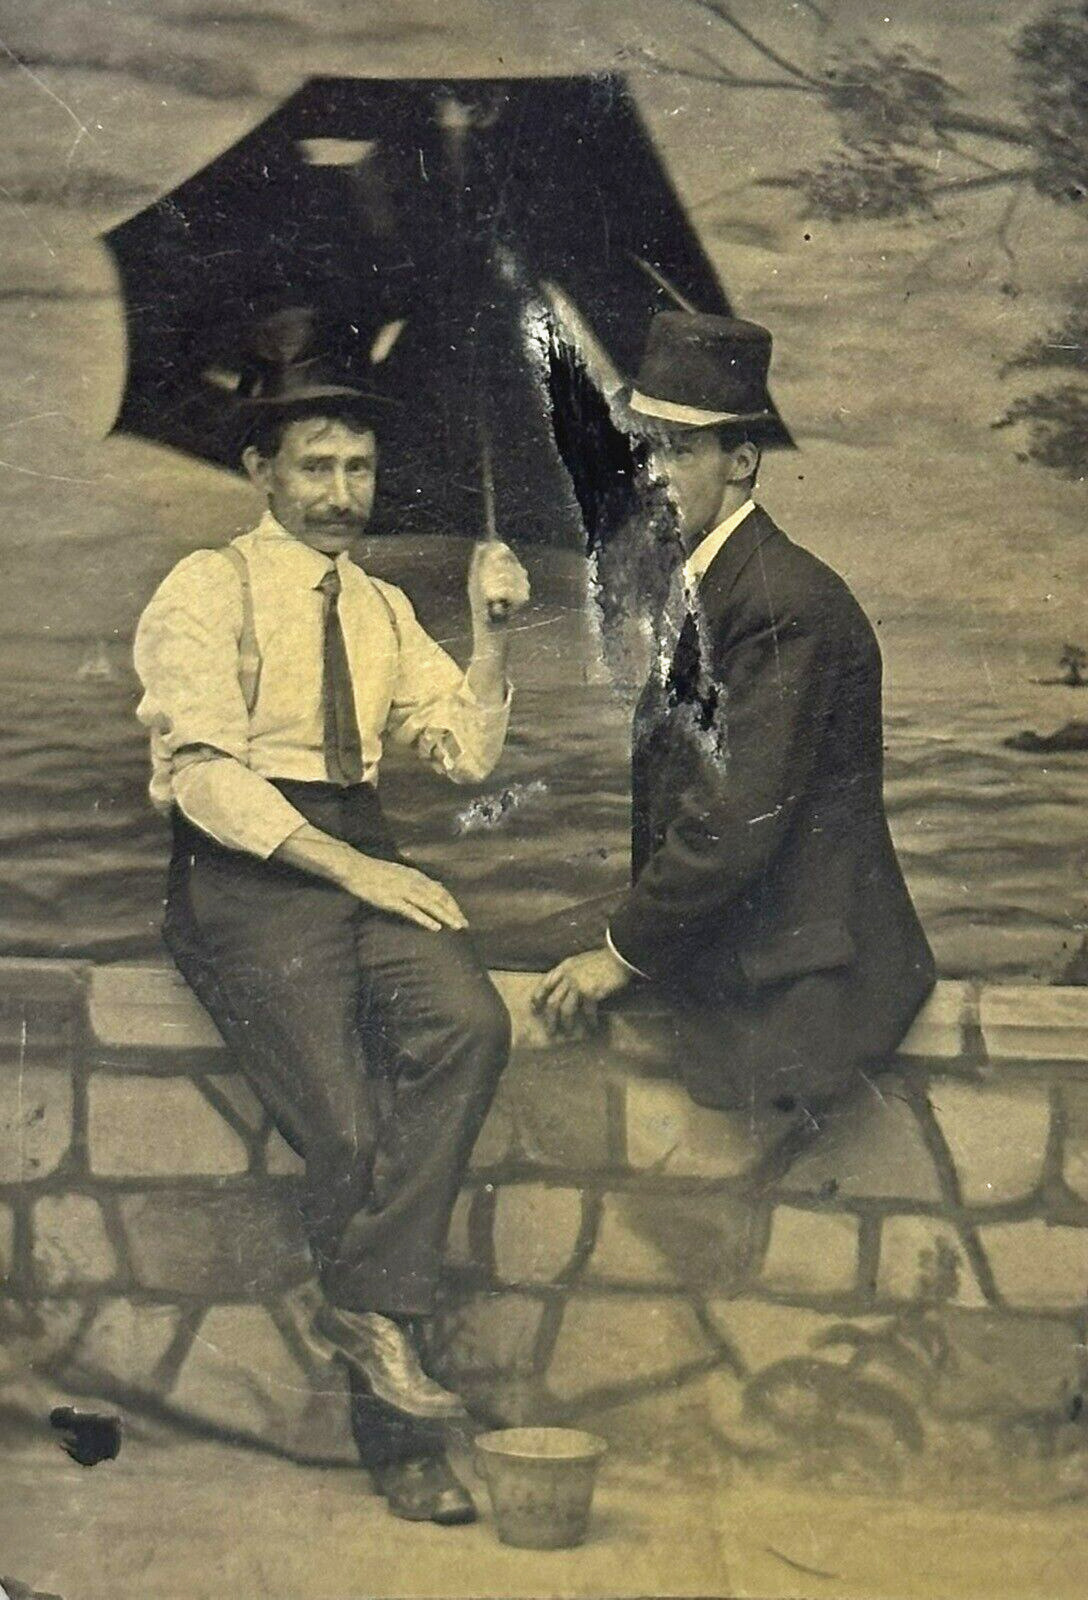 Antique 1800s Tintype Photograph of Victorian Era Men Sharing an Umbrella